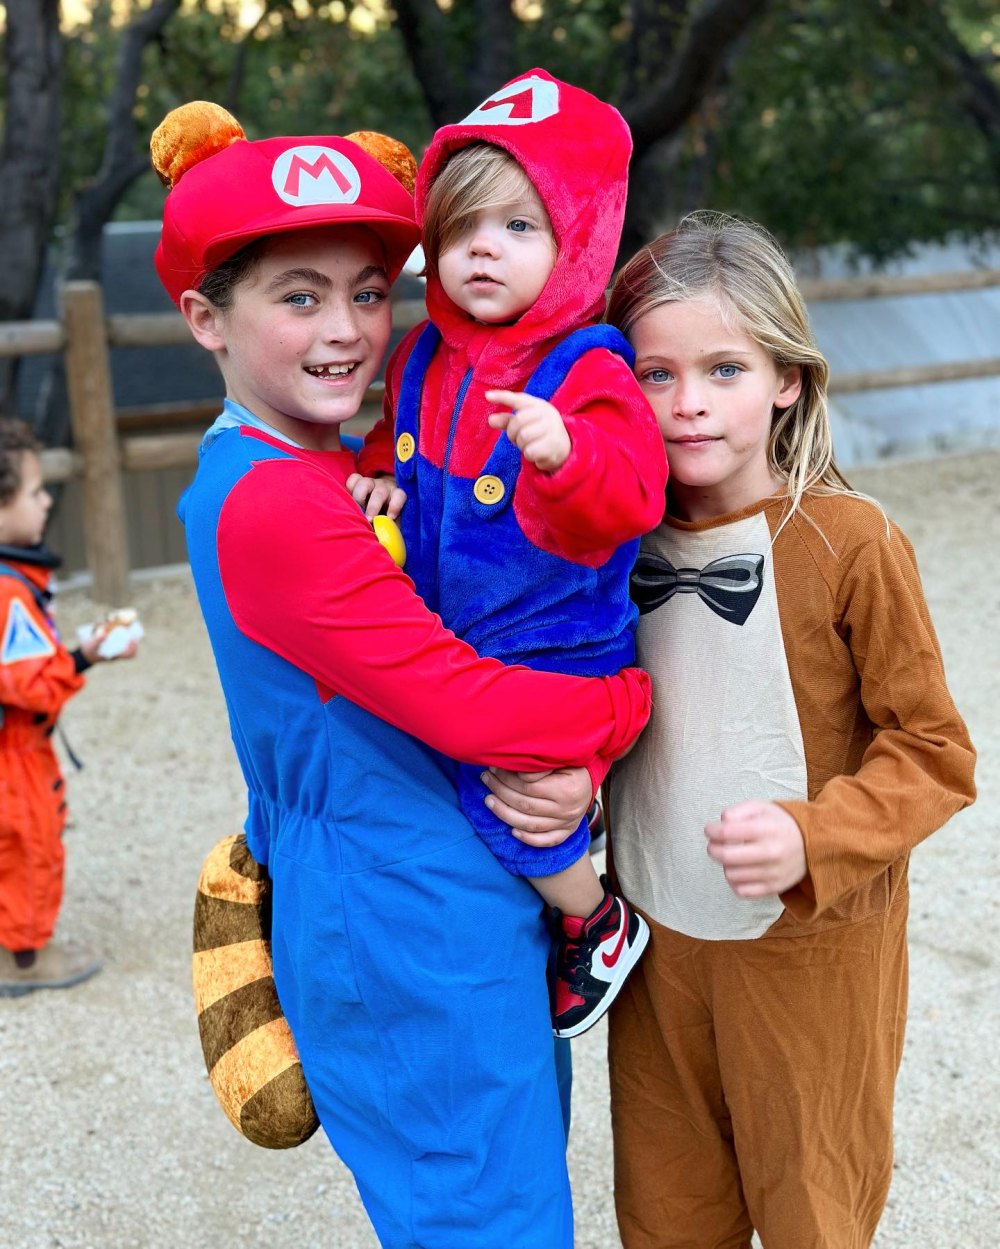 Brian Austin Green s Sons Zane and Bodhi Match in Super Mario Costumes